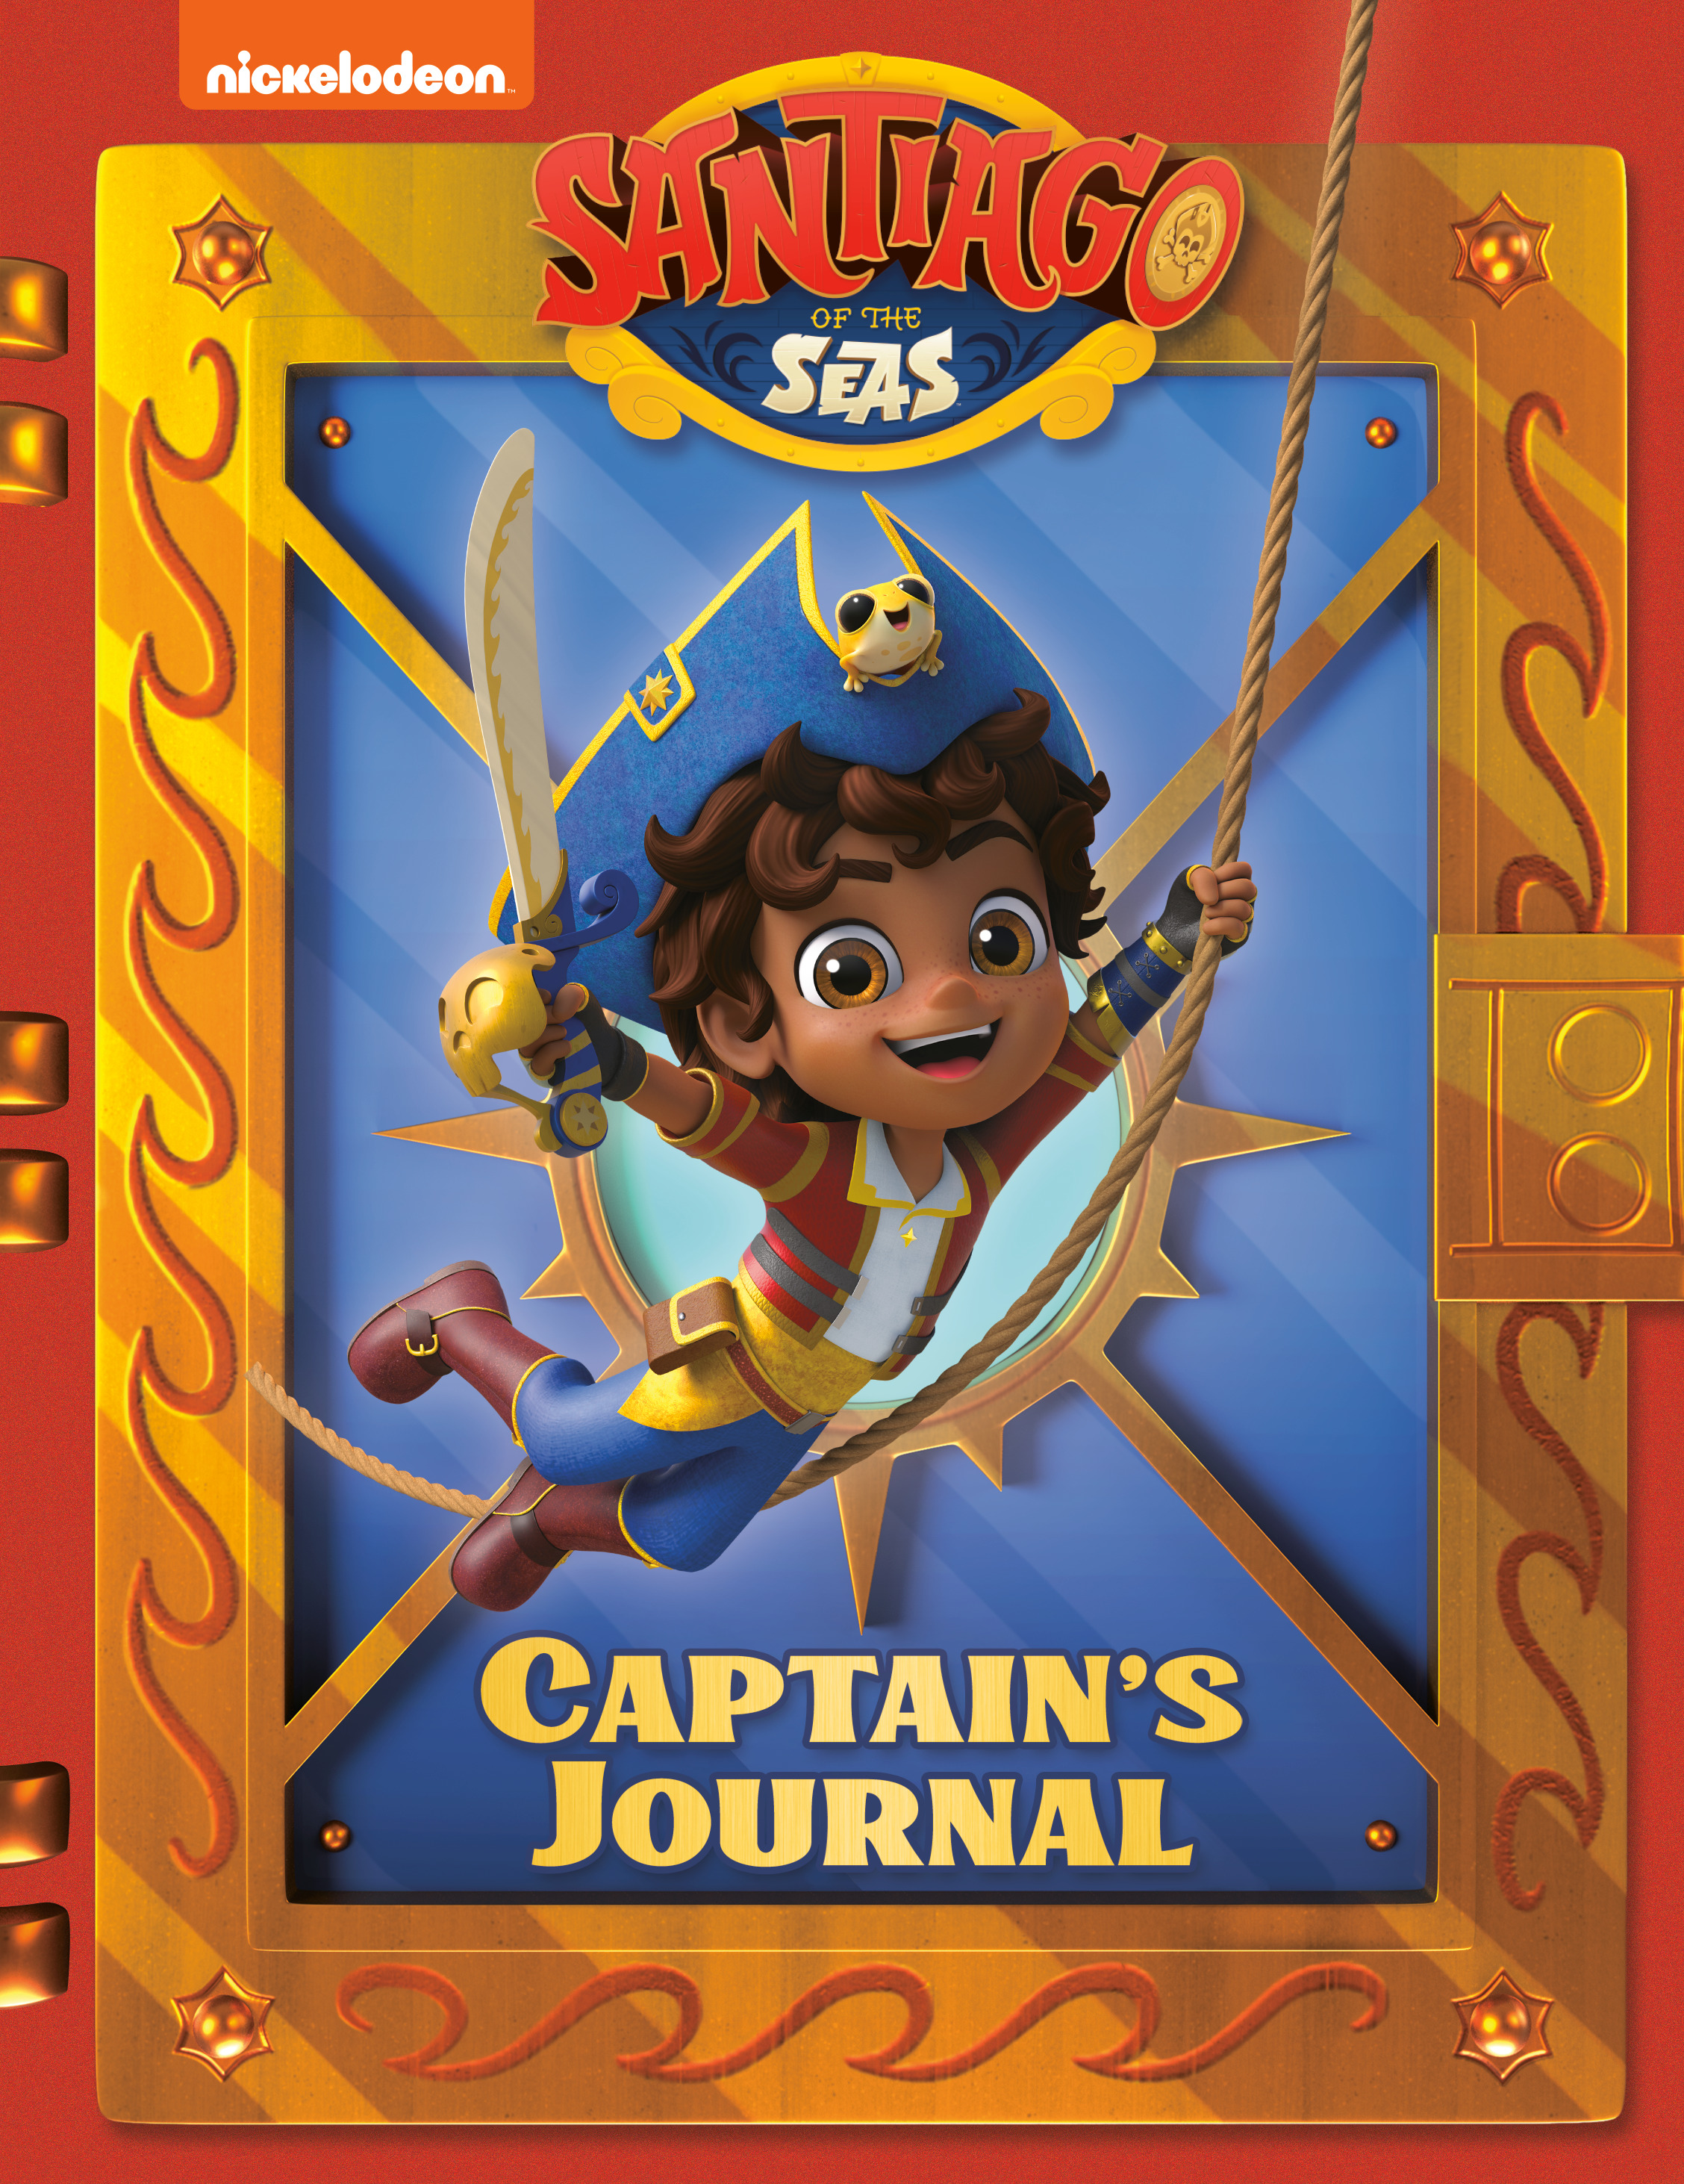 Santiago's Captain's Journal (Santiago of the Seas) | Activity book